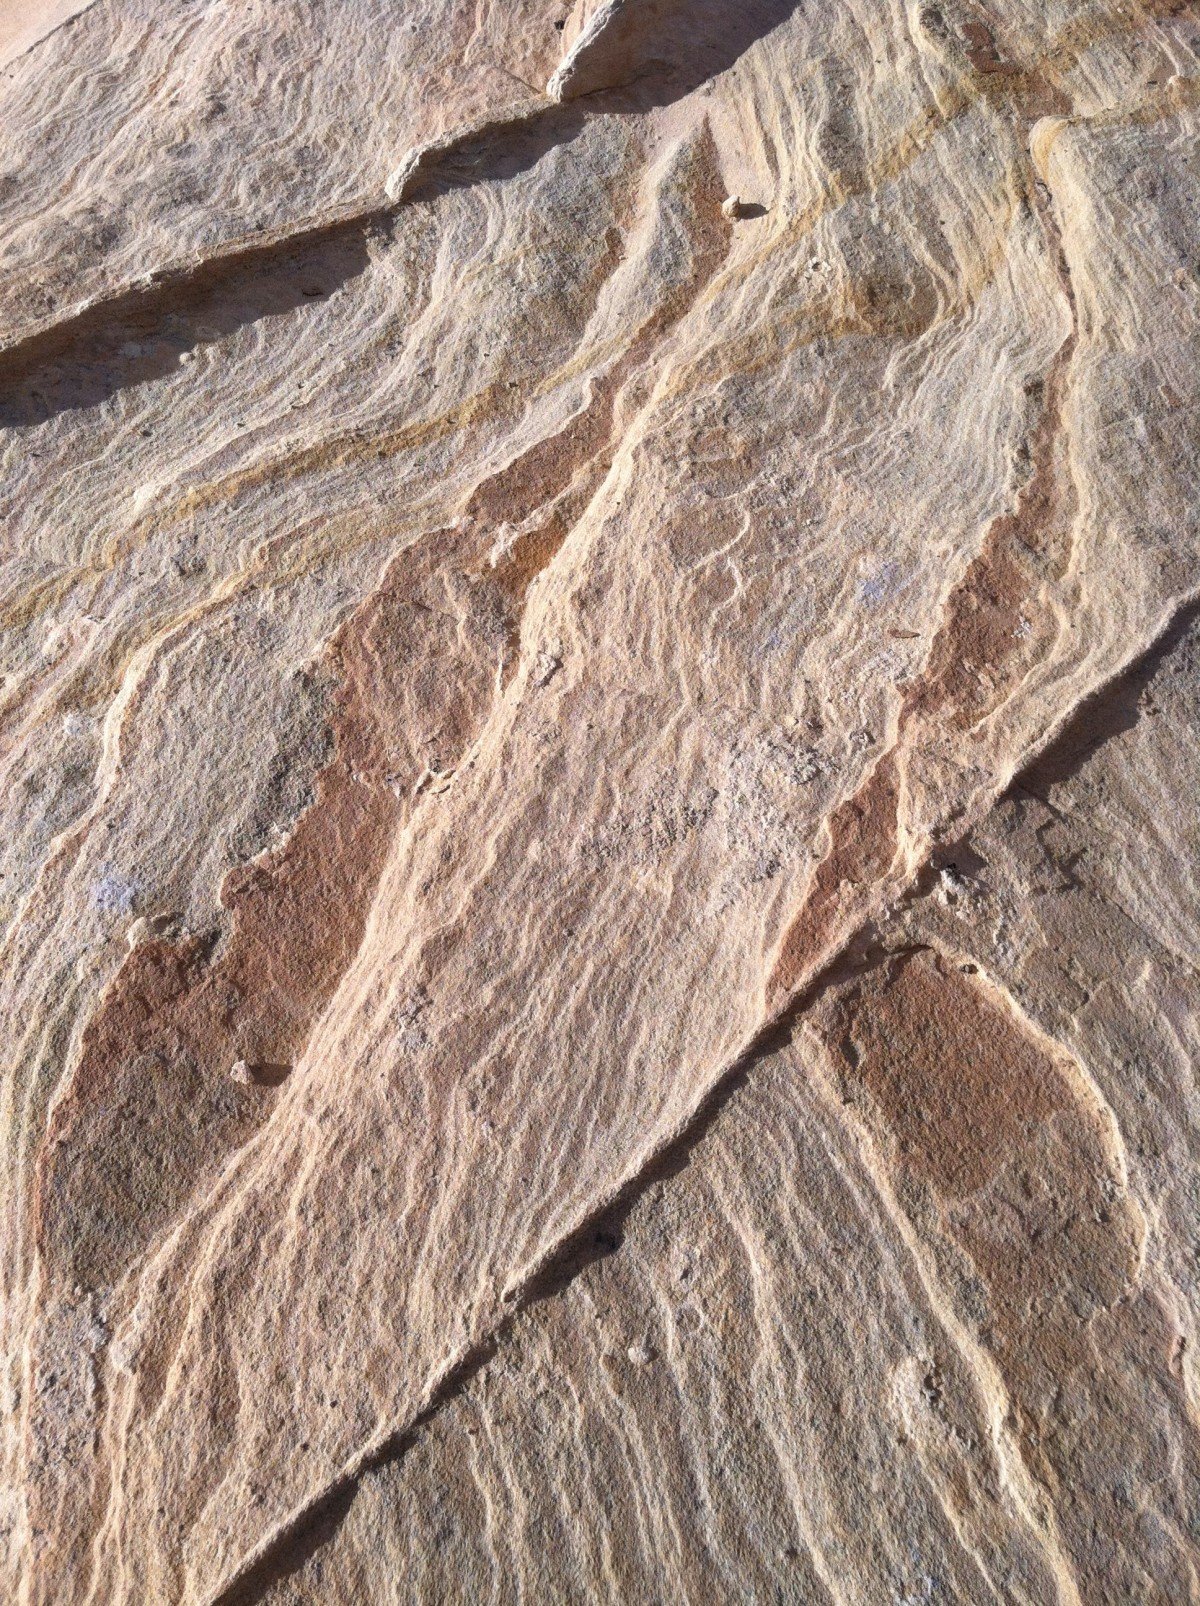 stones_rocks_texture_nature_boulder_hard_stone_natural-1348210.jpg!d.jpg